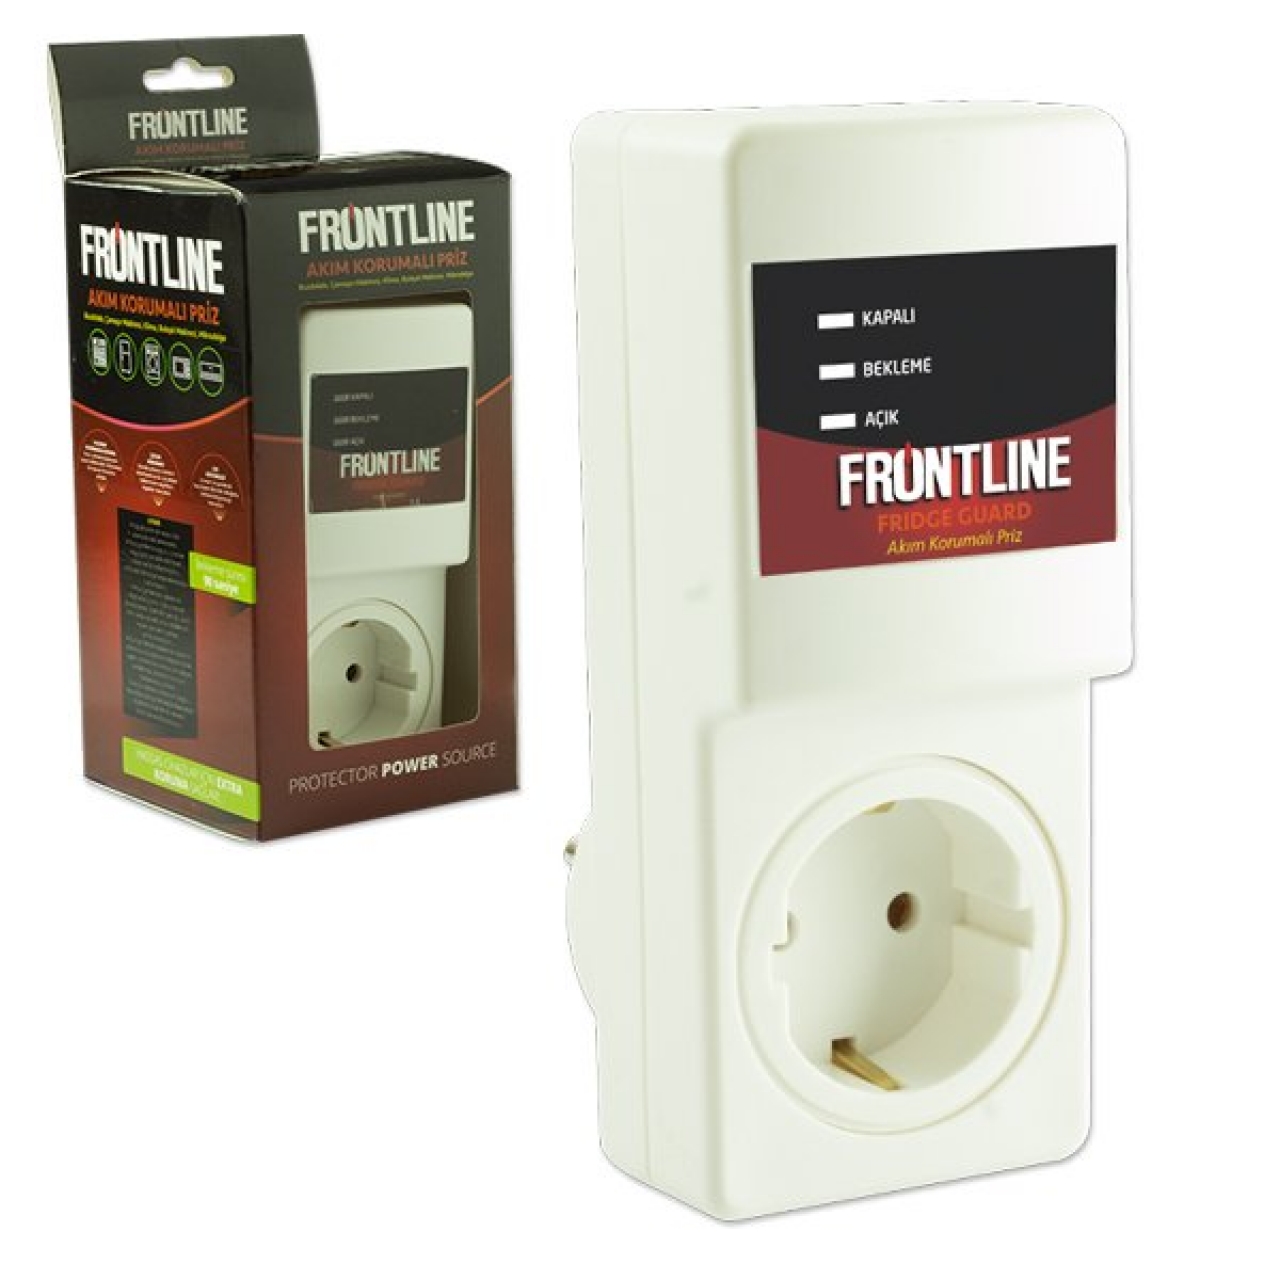 Frontline Fridge 5A 2000W Tekli Akım Korumalı Priz